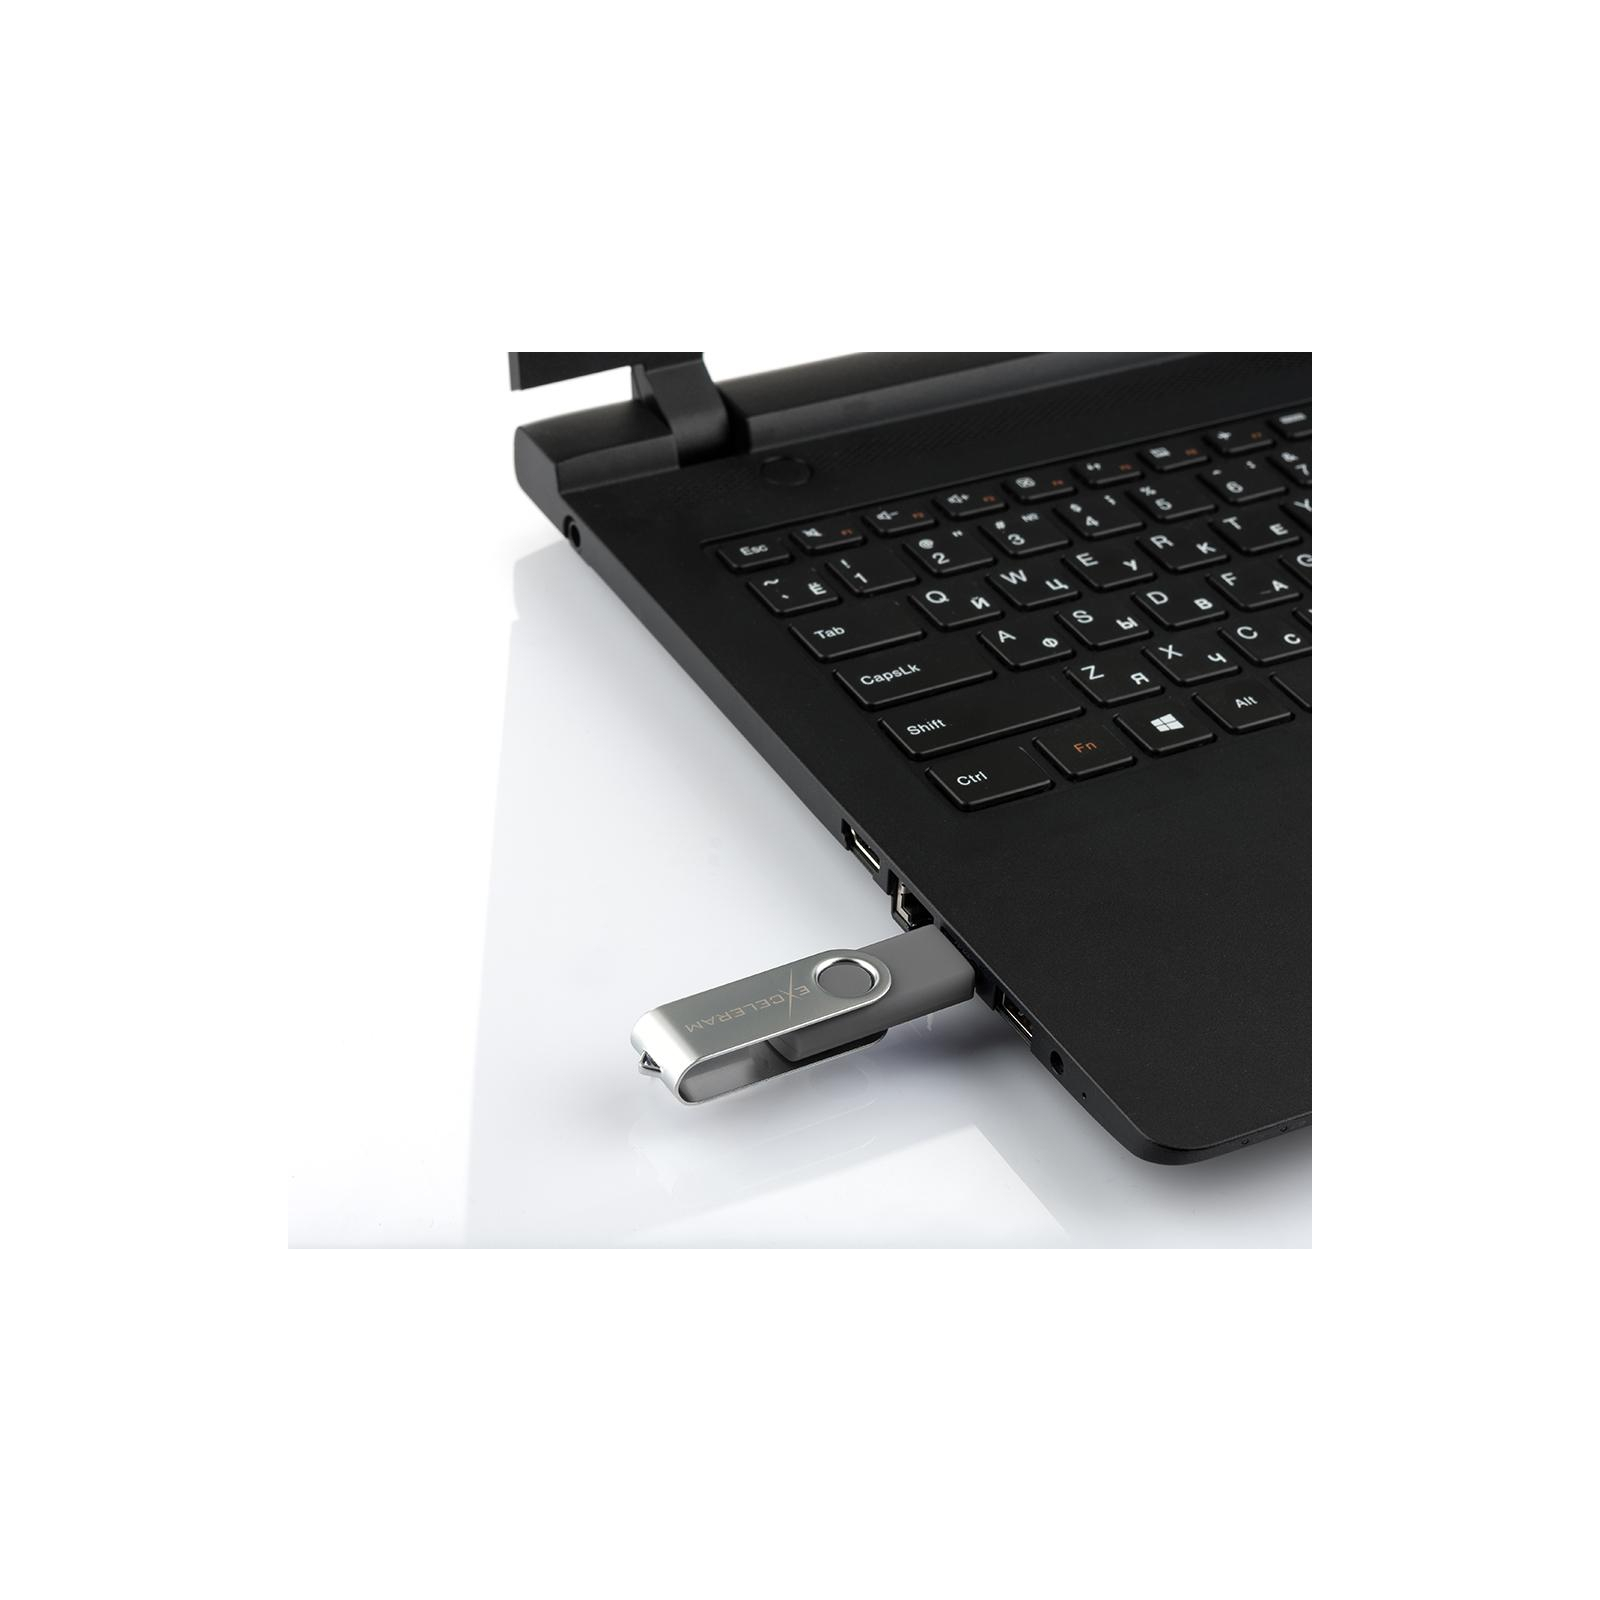 USB флеш накопитель eXceleram 8GB P1 Series Silver/Gray USB 2.0 (EXP1U2SIG08) изображение 7